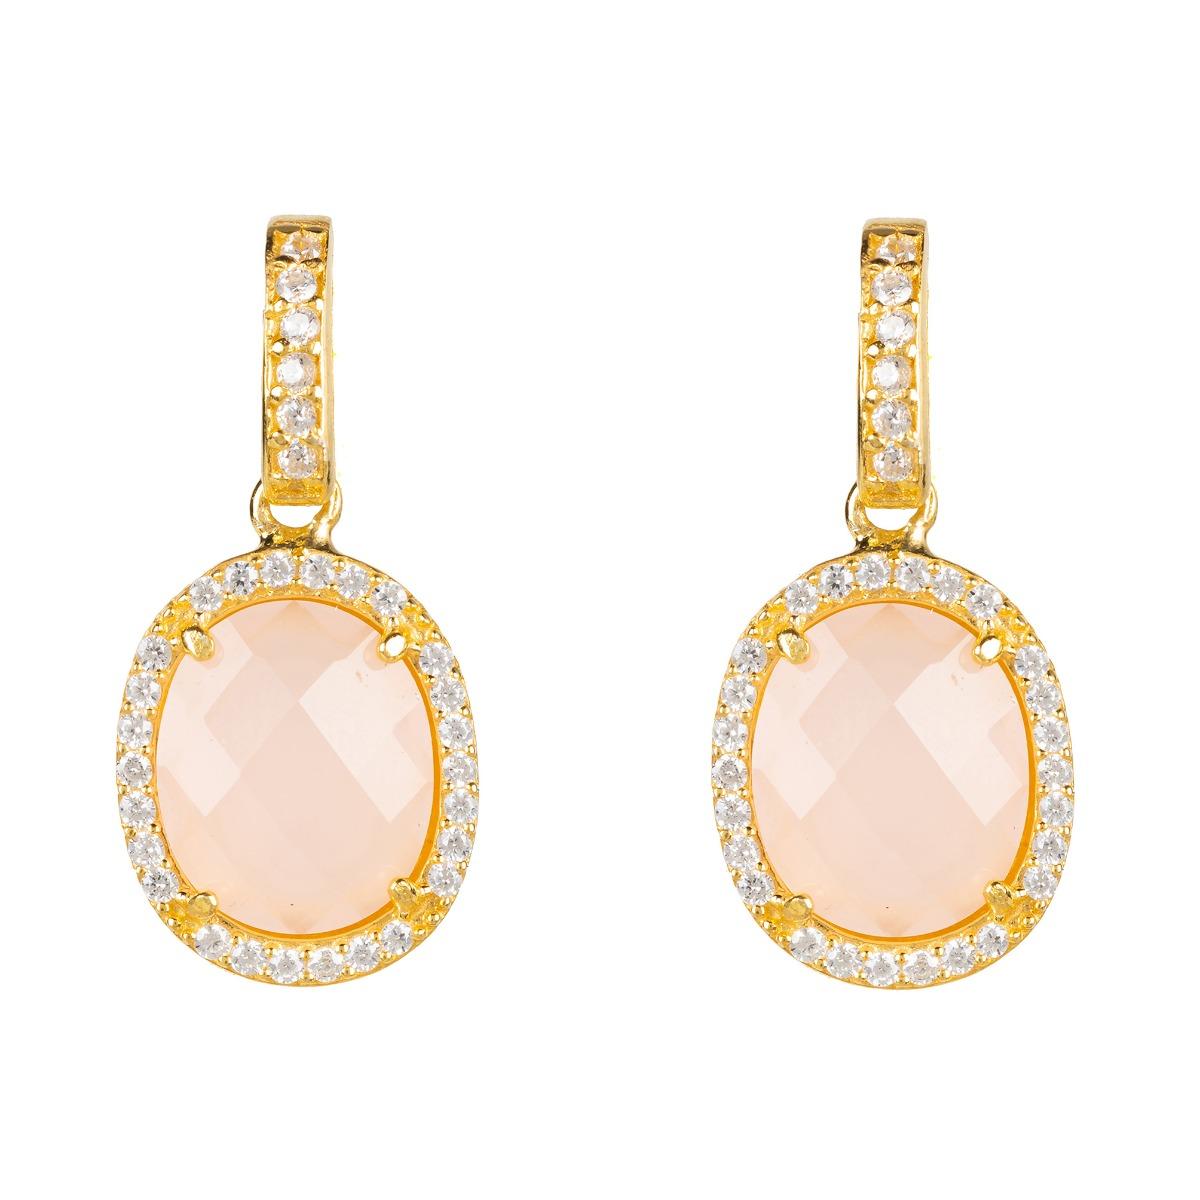 LÁTELITA London Beatrice Earrings Gold Rose Quartz in Pink - Lyst